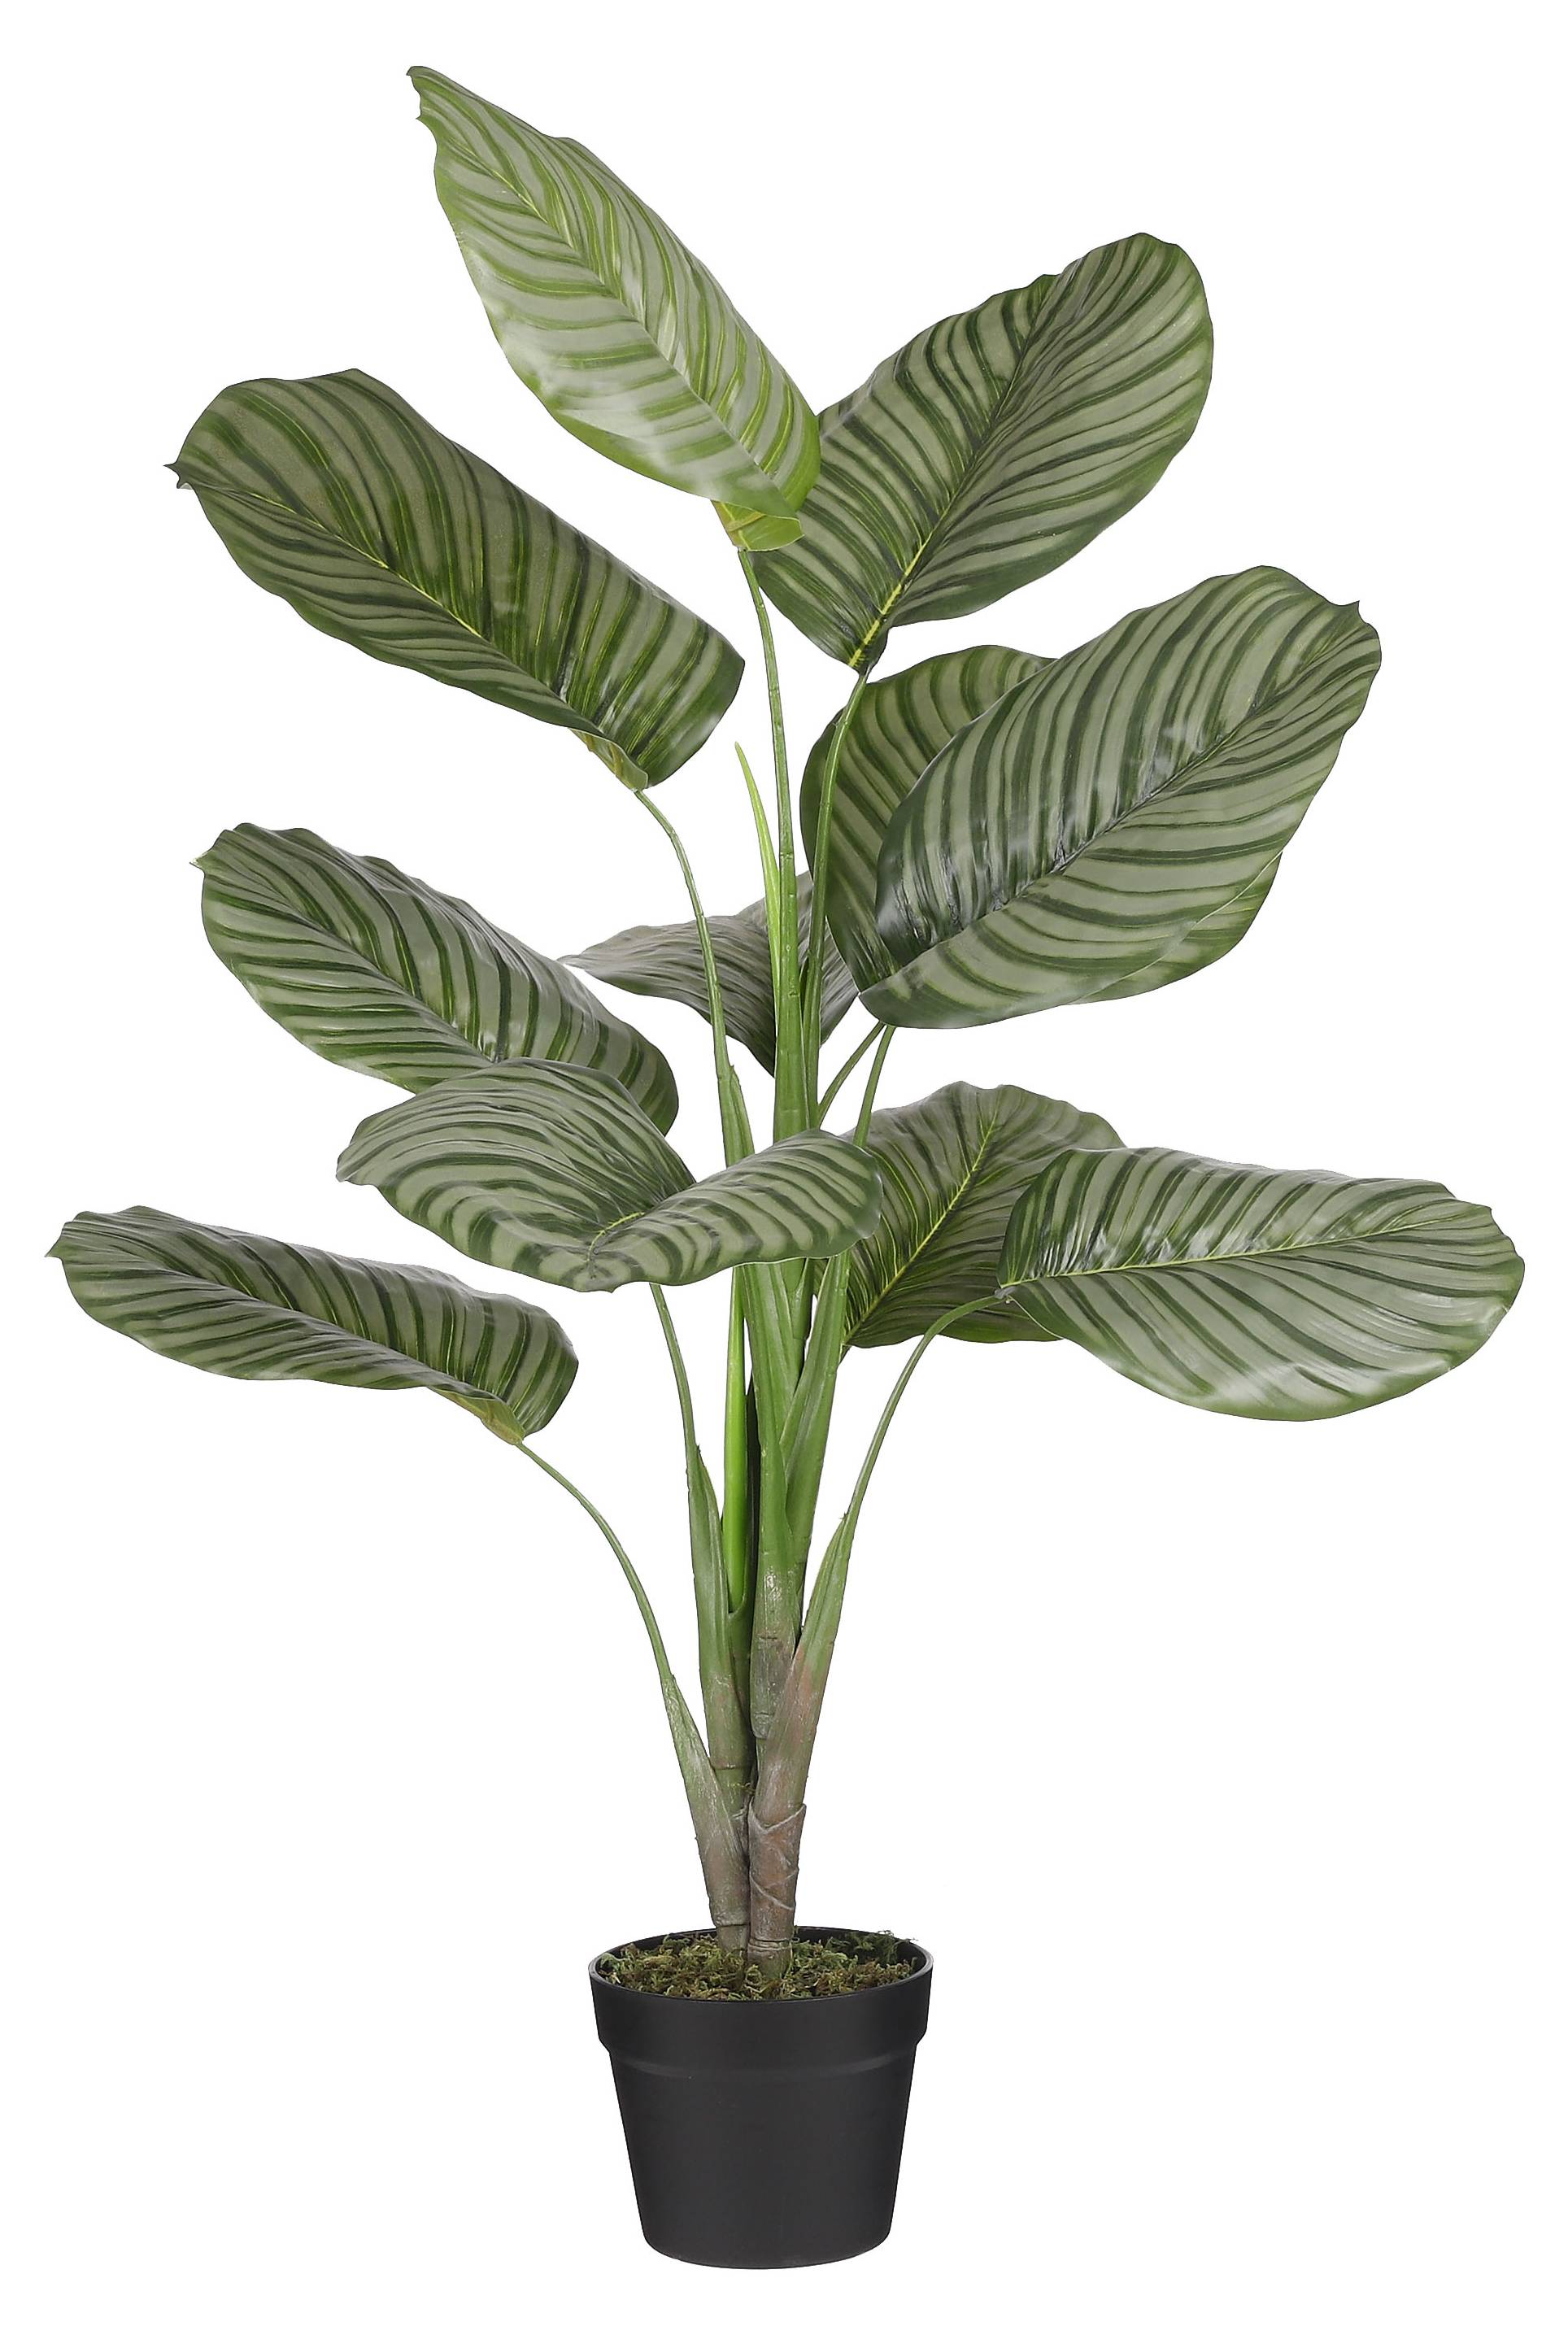 Calathea Orbifolia Kunstpflanze kaufen | home24